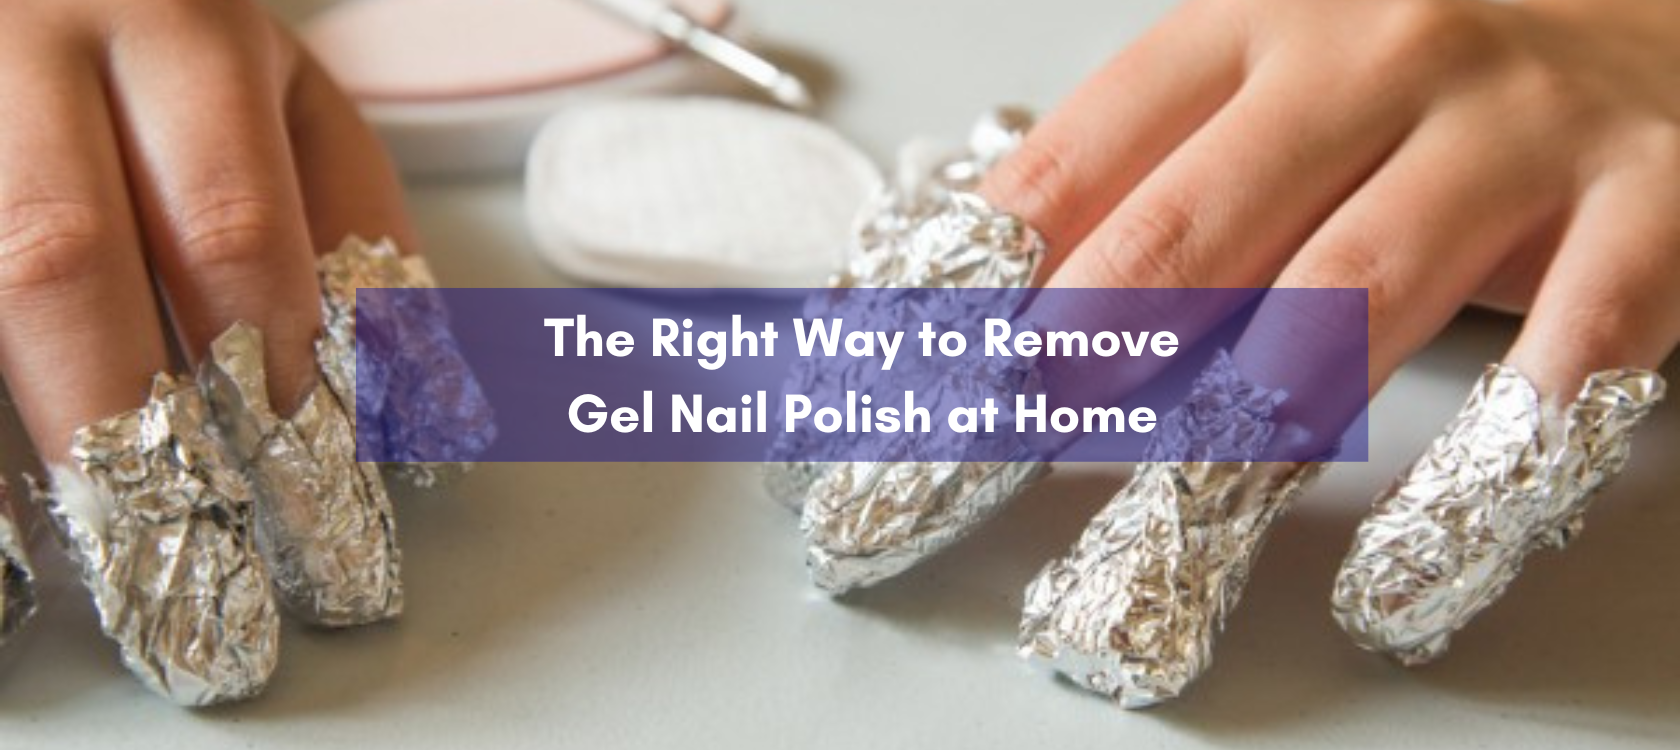 The Right Way to Remove Gel Nail Polish at Home